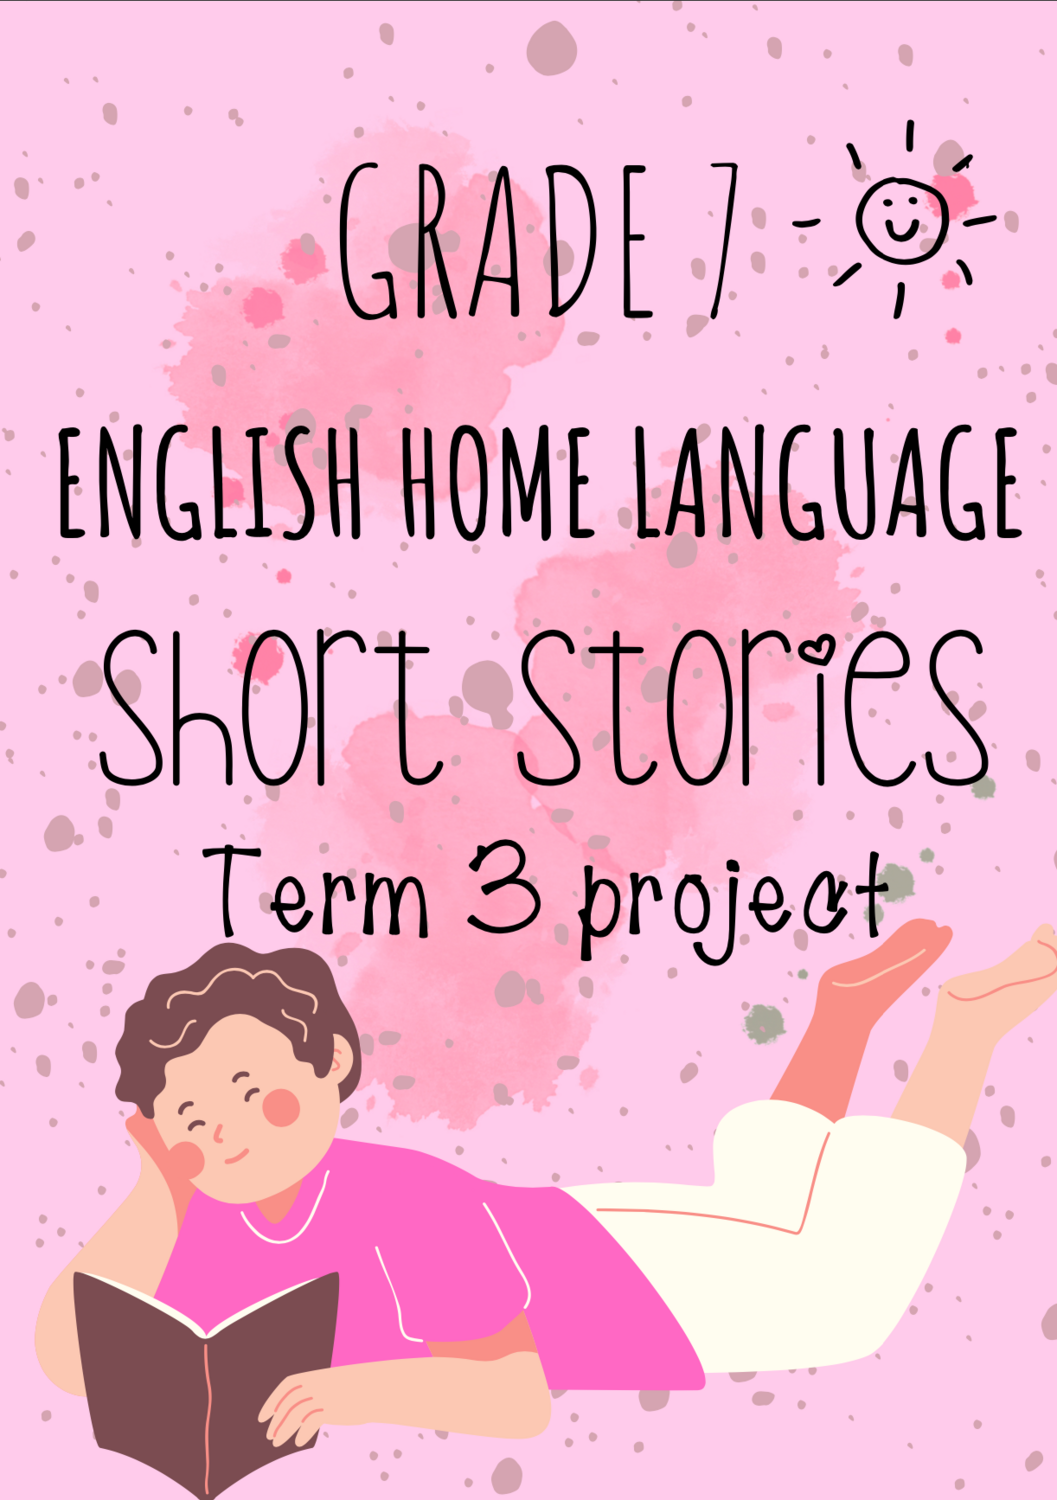 grade-7-english-home-language-term-3-project-short-stories